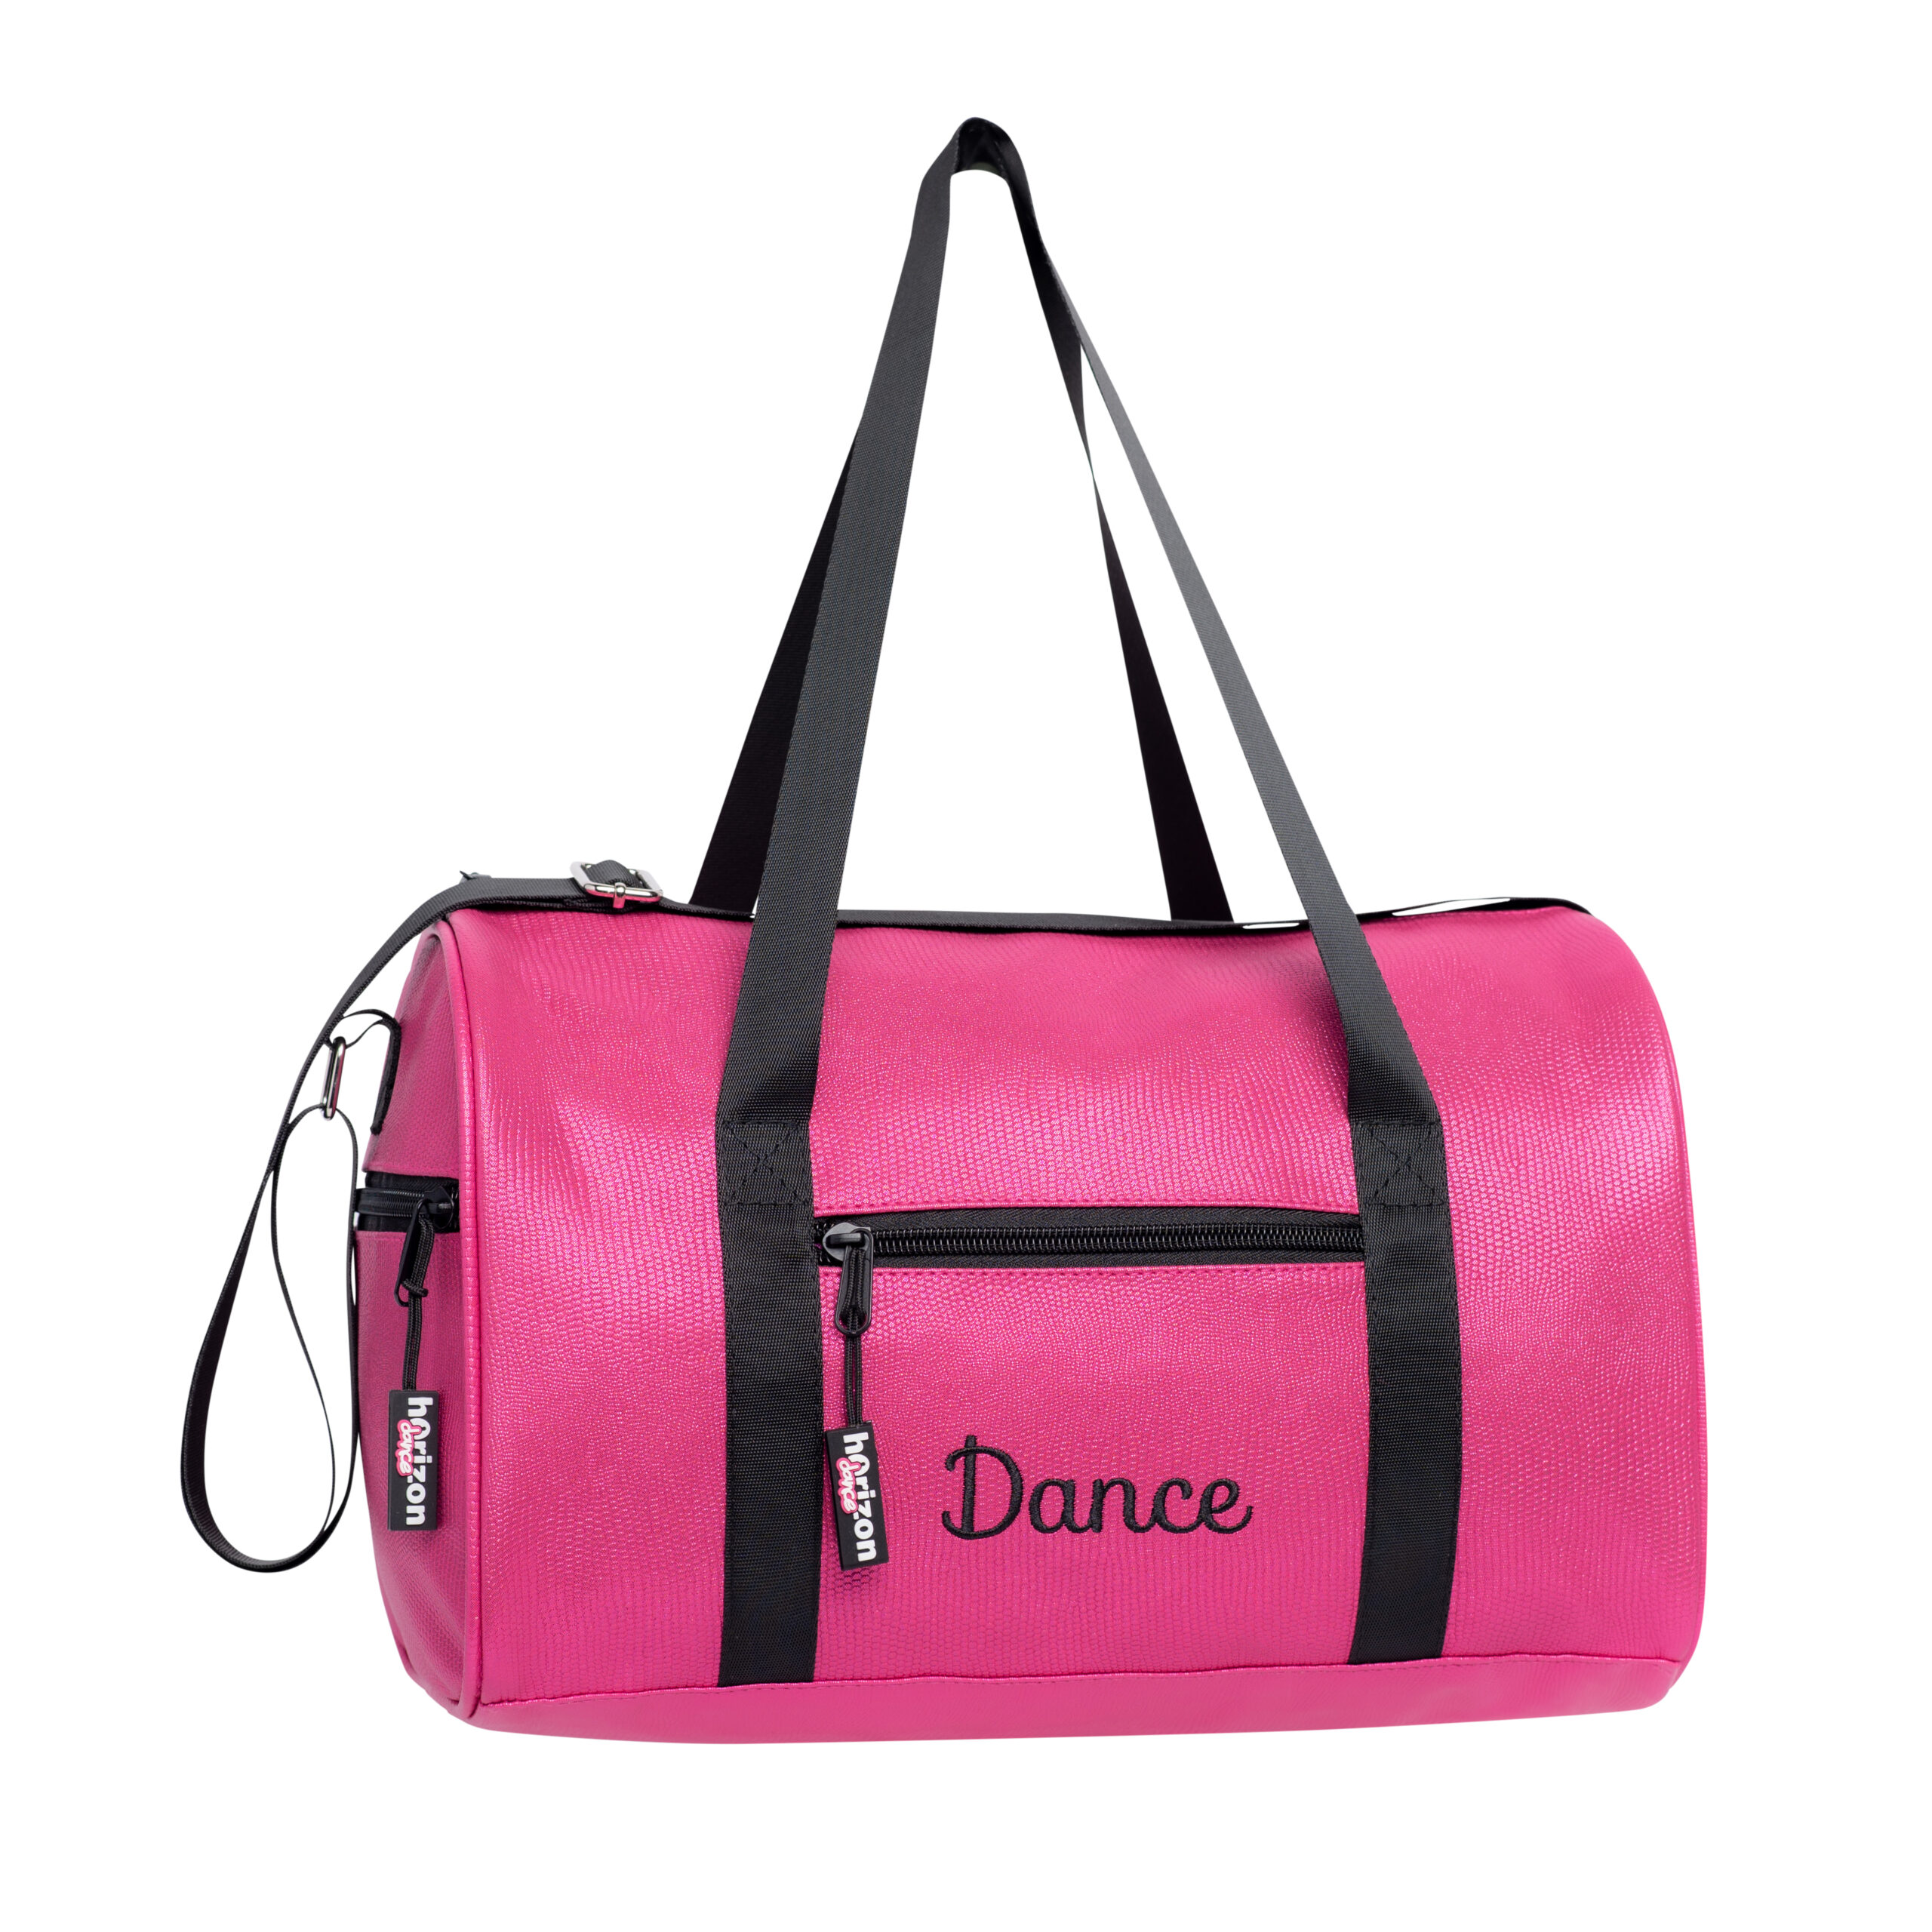 4343 - Glamour Duffel - Pink - NEW! - Horizon Dance Bags